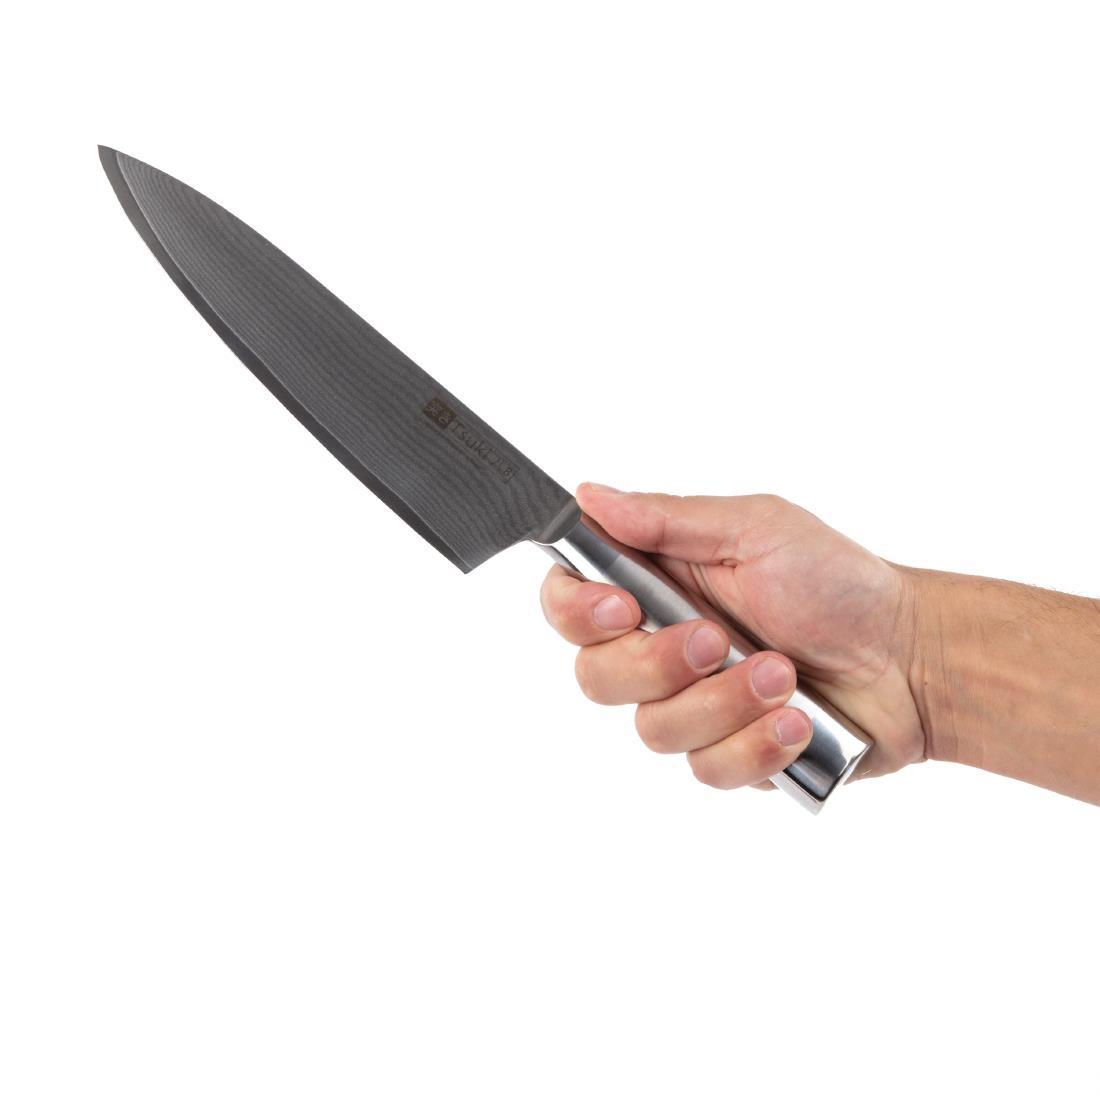 Vogue Tsuki Series 8 Chef Knife 20cm - DA440  - 6